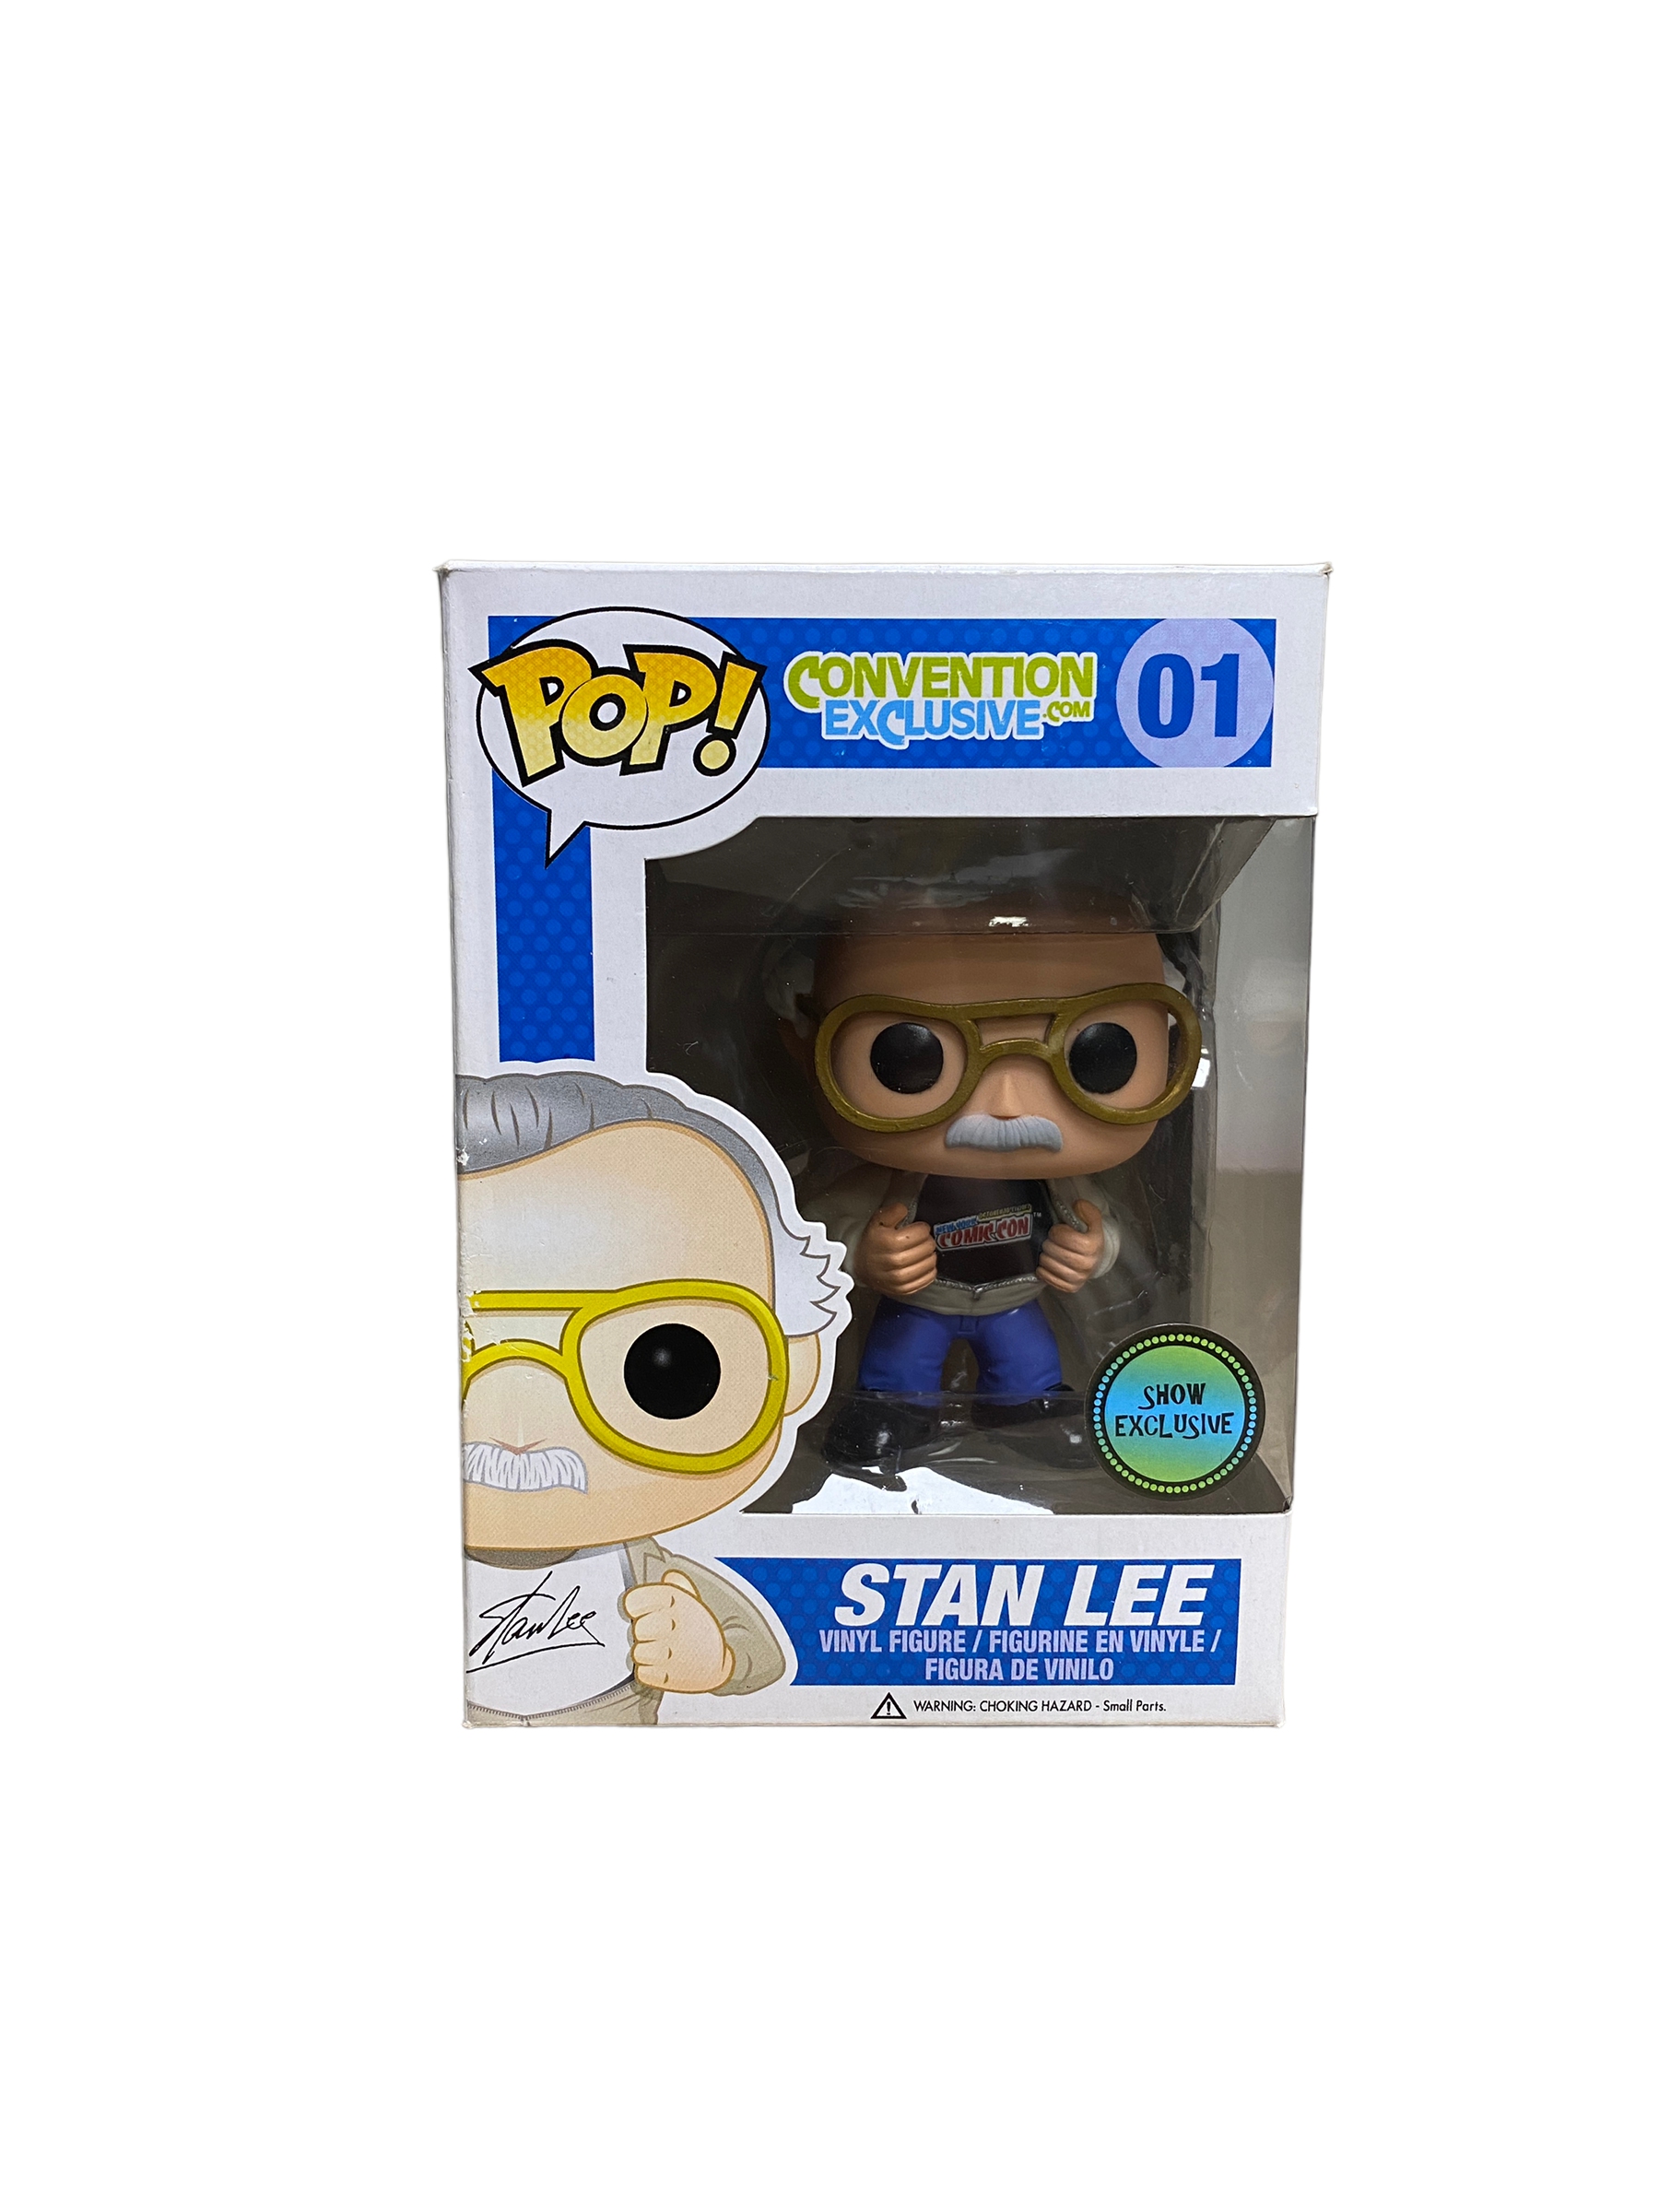 Stan Lee #01 (NYCC) Funko Pop! - ConventionExclusive.com - Show Exclusive LE1000 Pcs - Condition 8/10